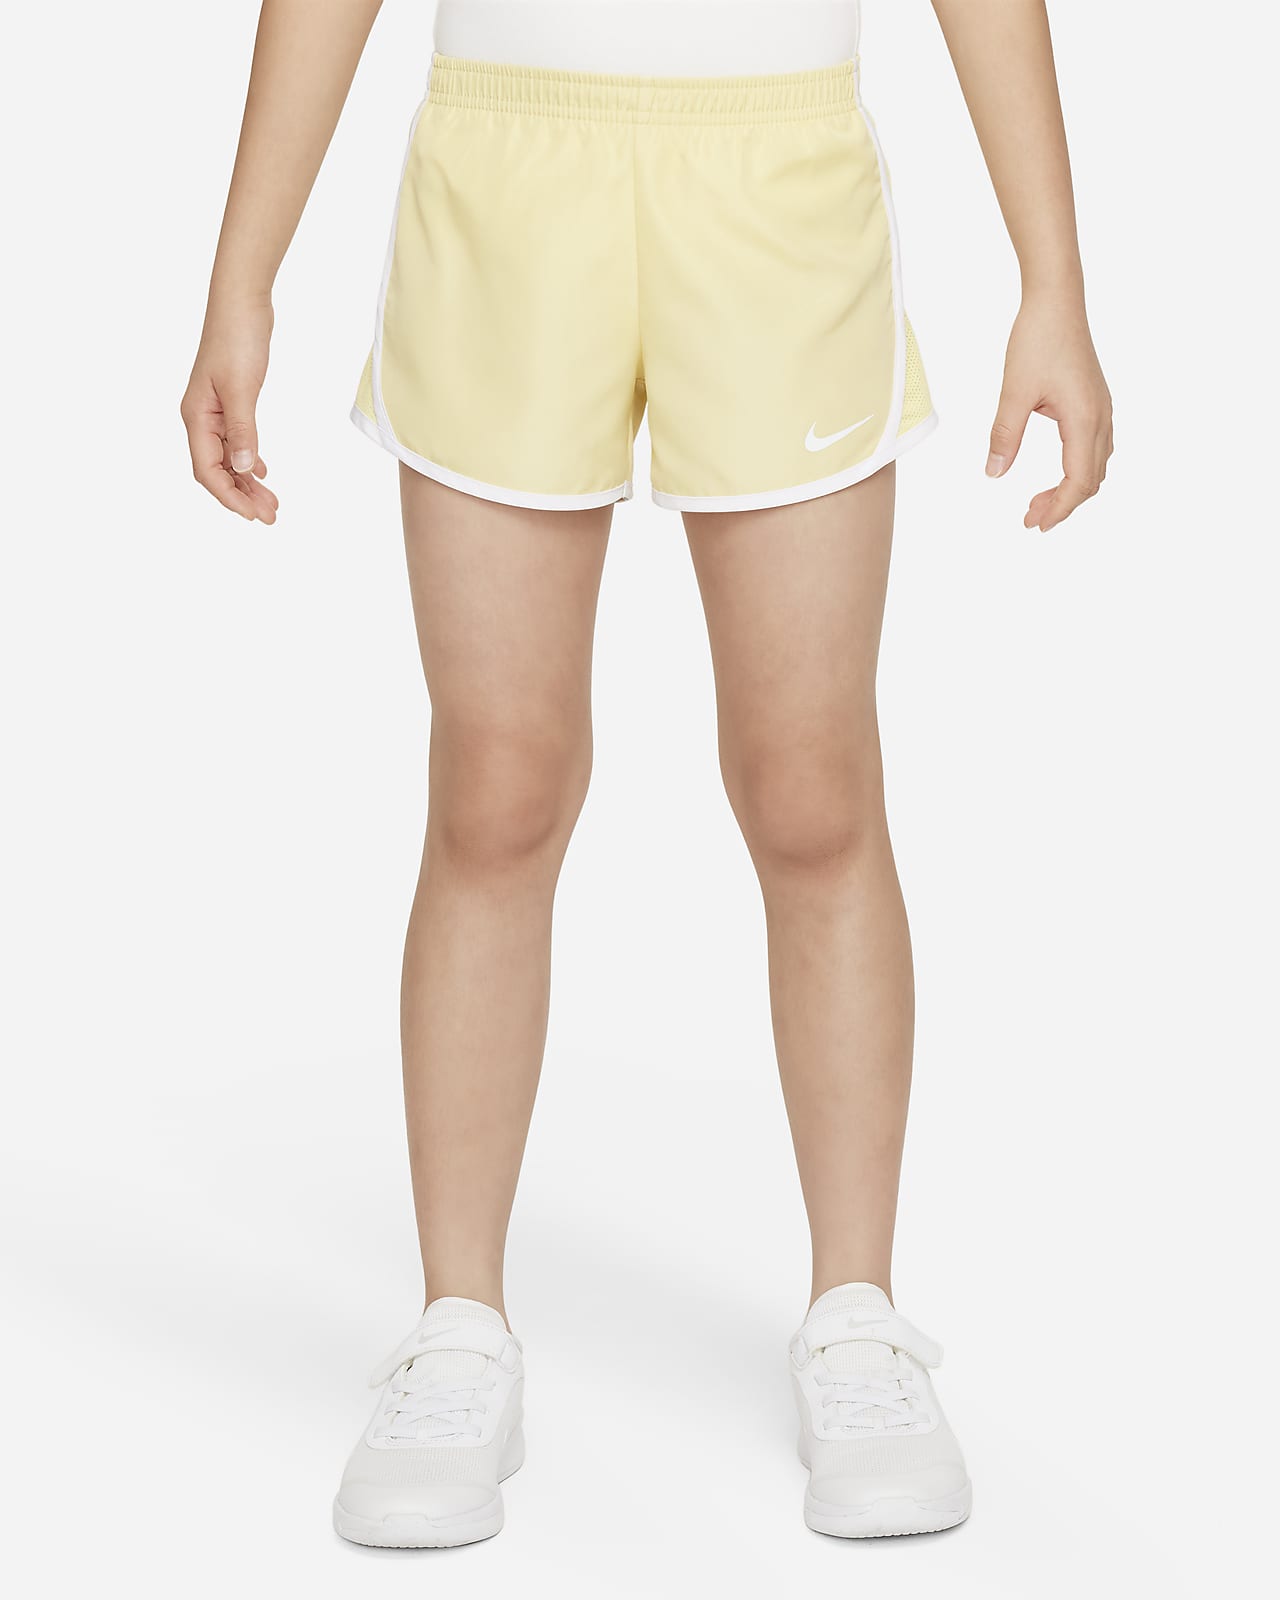  Nike Girls' Dri-Fit Tempo Running Shorts Size Medium :  Clothing, Shoes & Jewelry